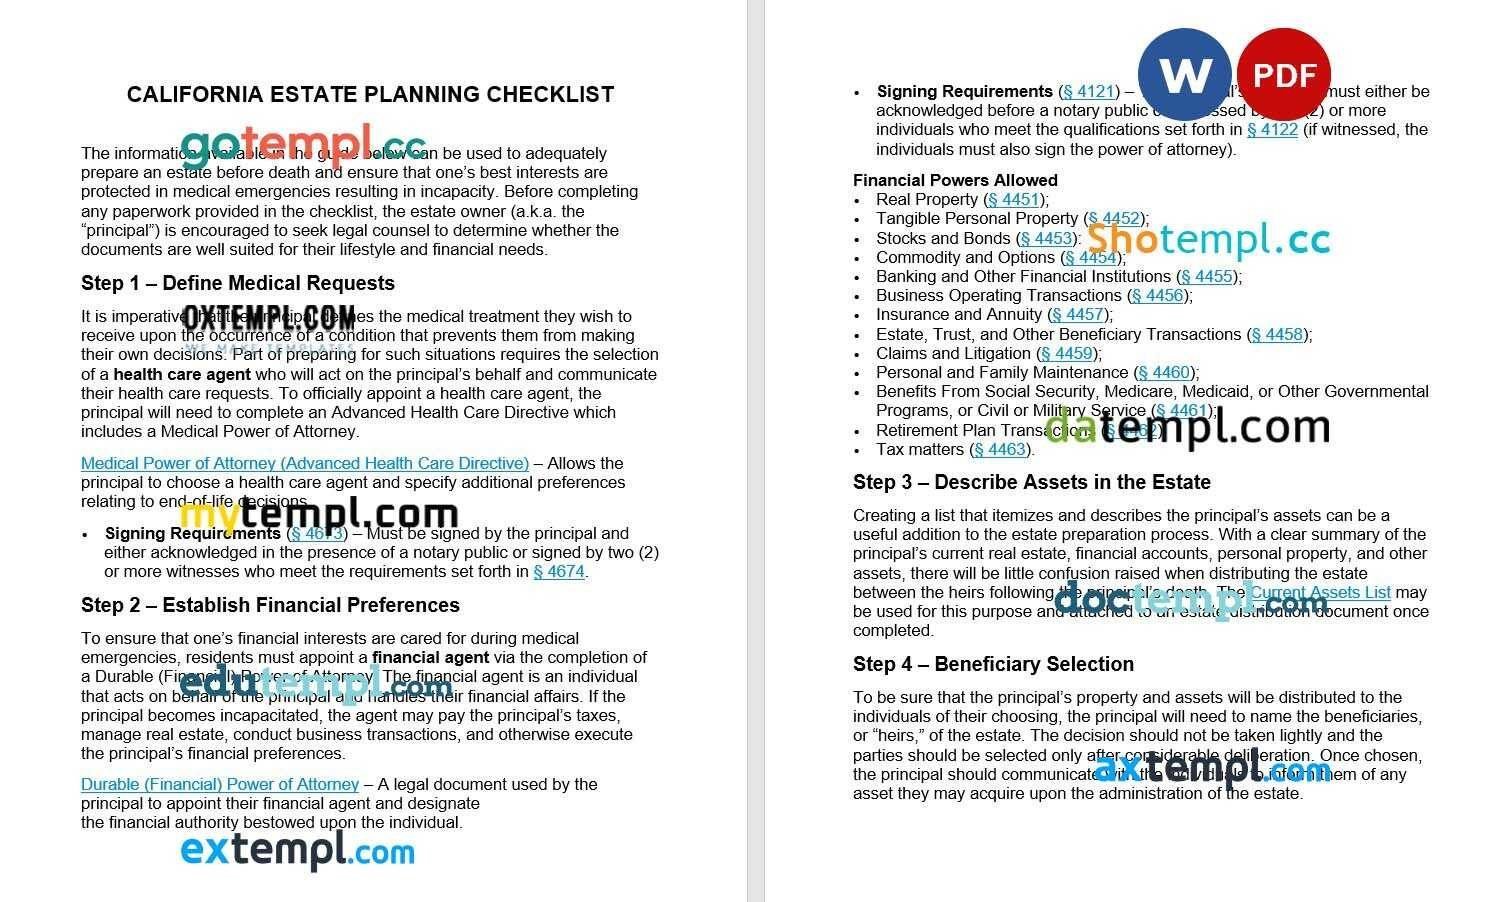 California Estate Planning Checklist example, fully editable